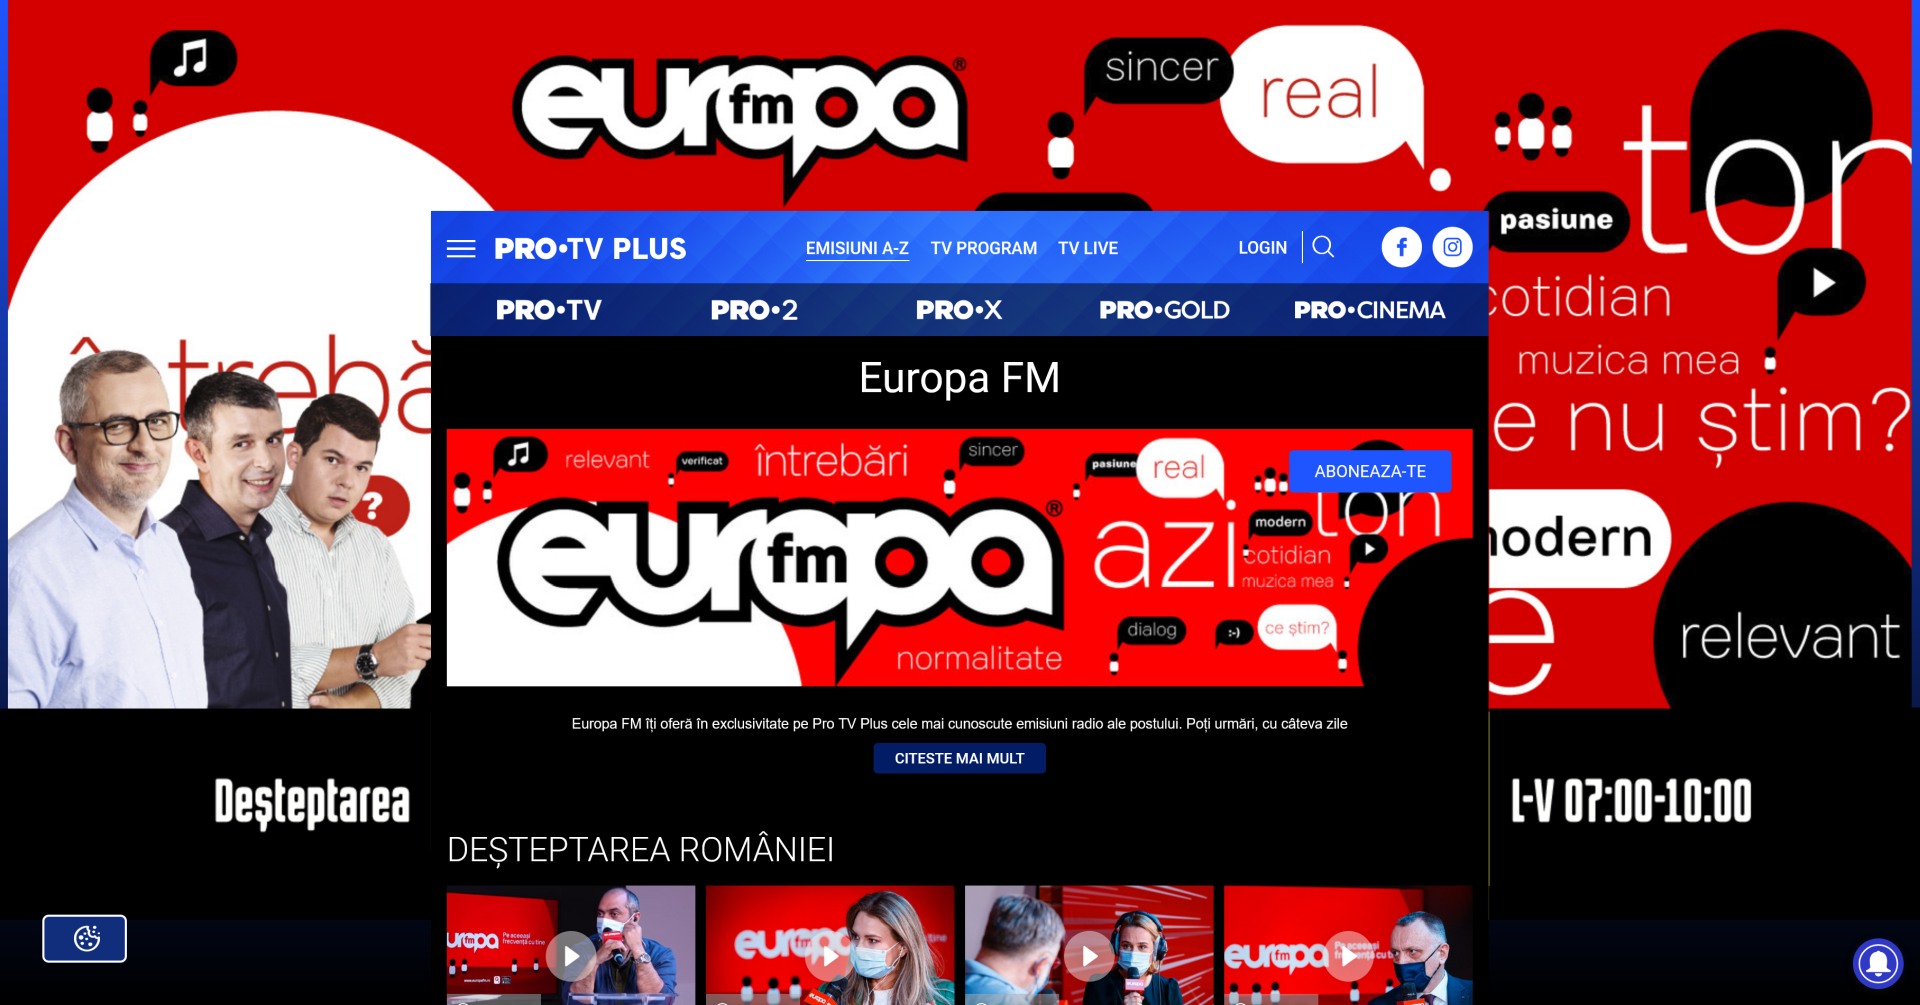 Фм радио европа плюс. Европа плюс ТВ чат. Европа плюс ТВ программа 2012. Европа плюс ТВ 2016.